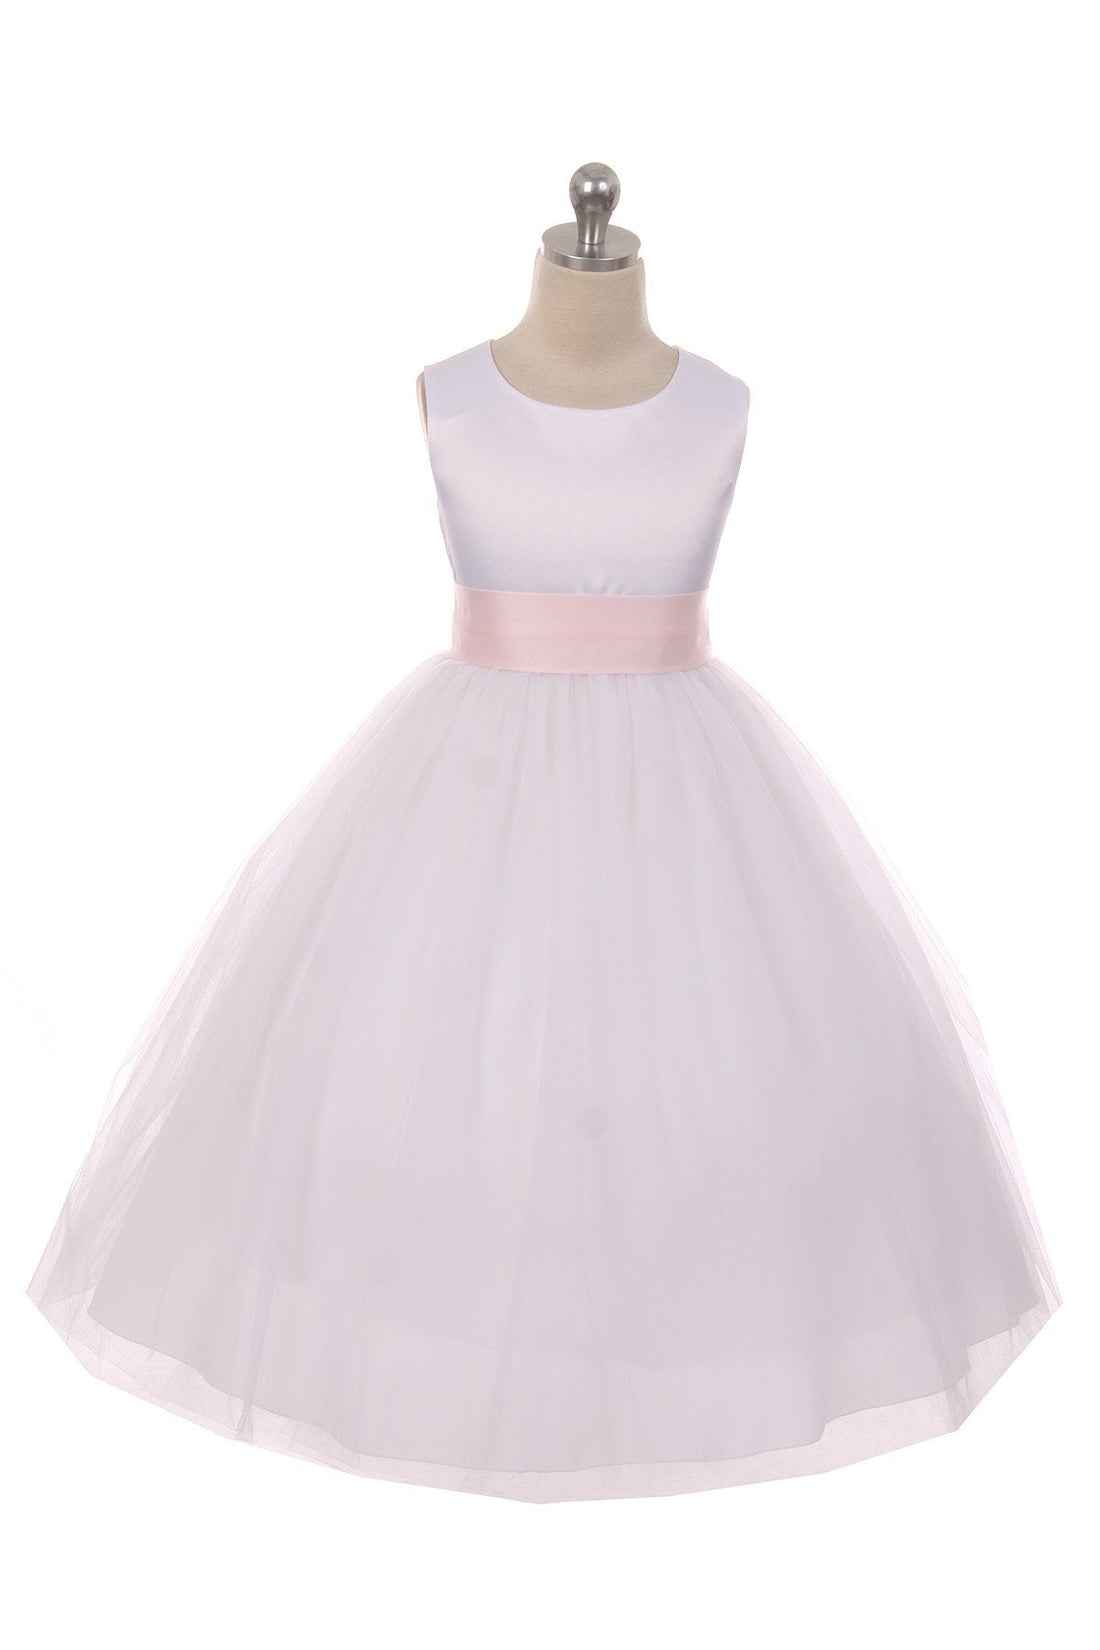 Pink Girl Dress - Ivory Satin Sash Bow Girl Dress - AS411 Kids Dream